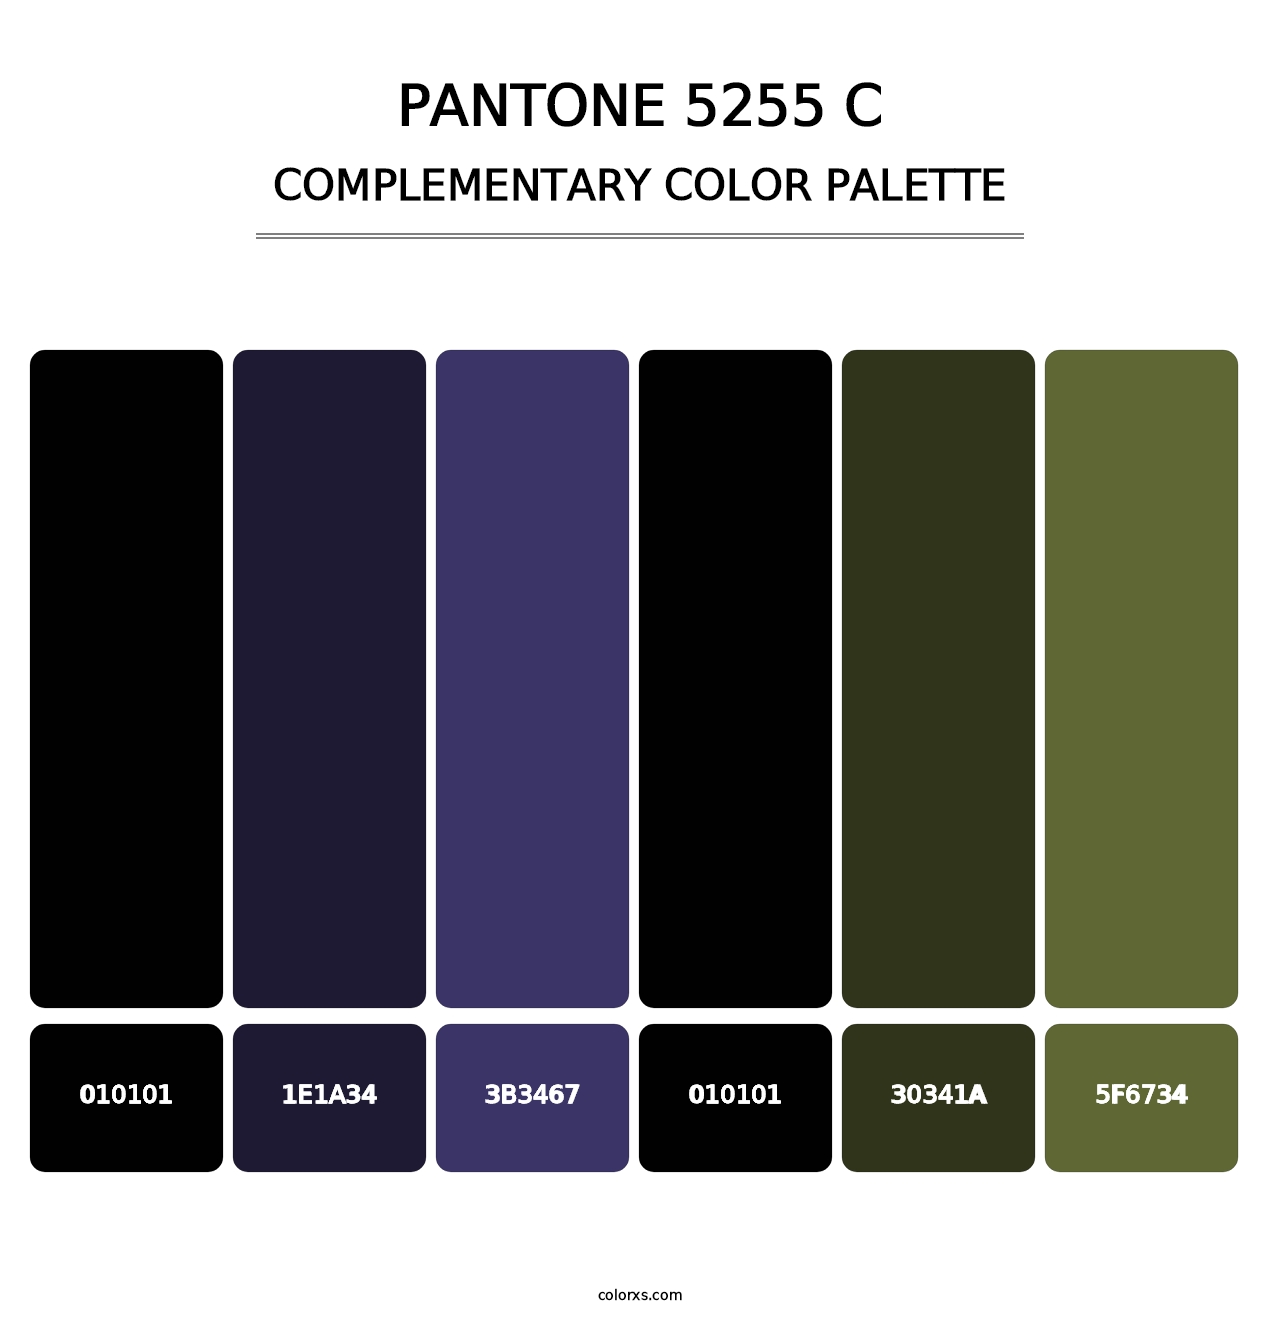 PANTONE 5255 C - Complementary Color Palette